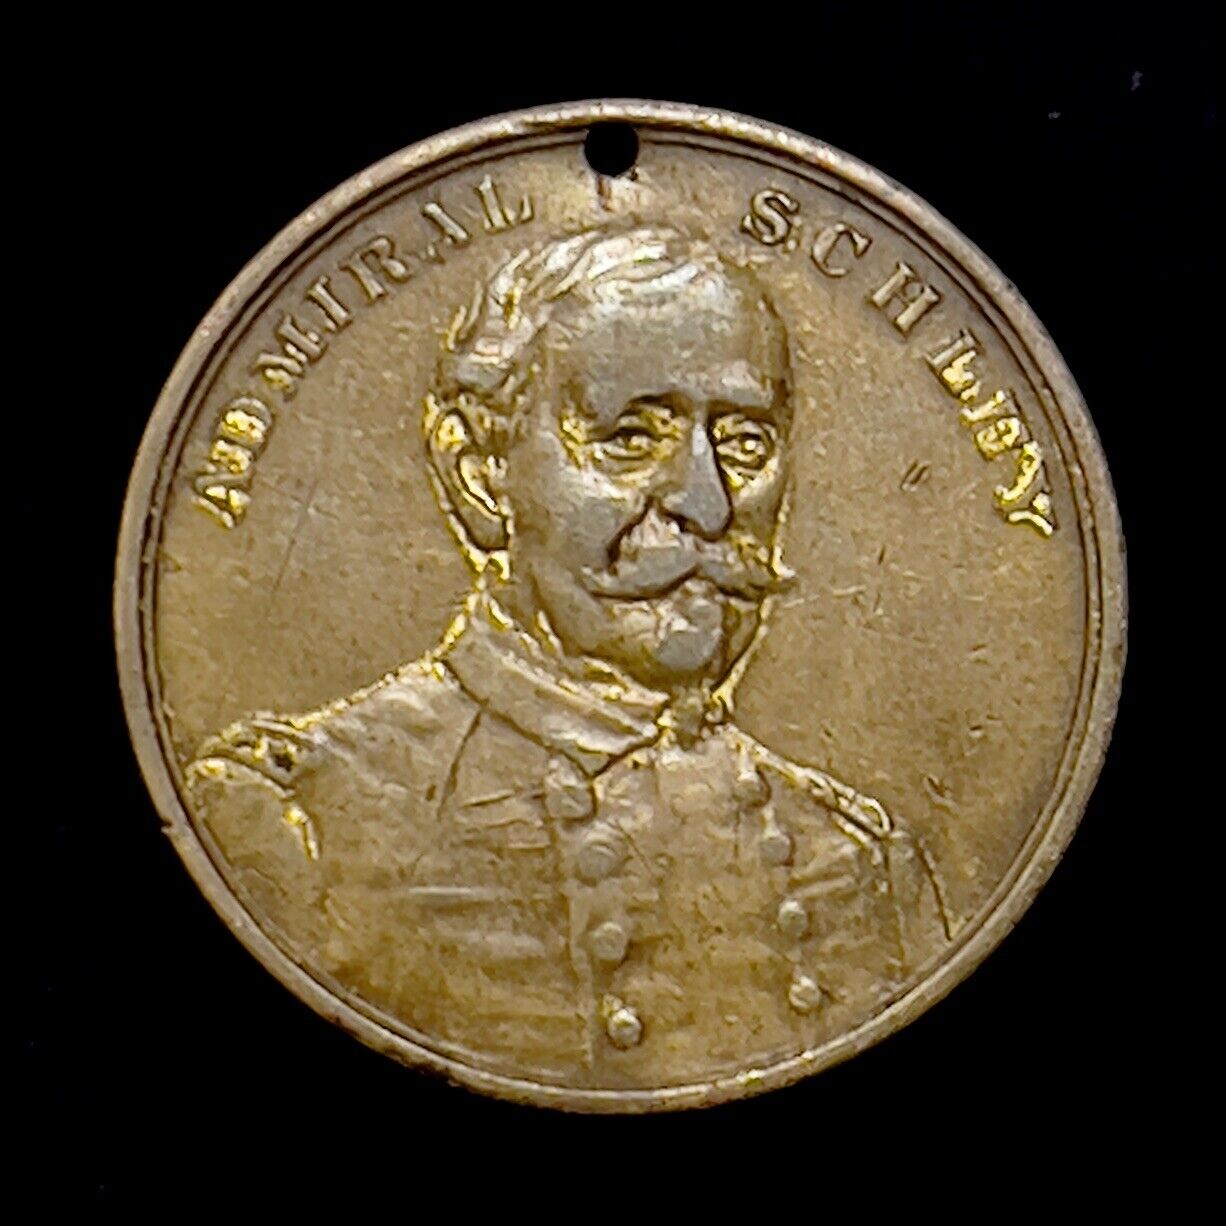 1899 Alabama State Fair Admiral Schley Medal